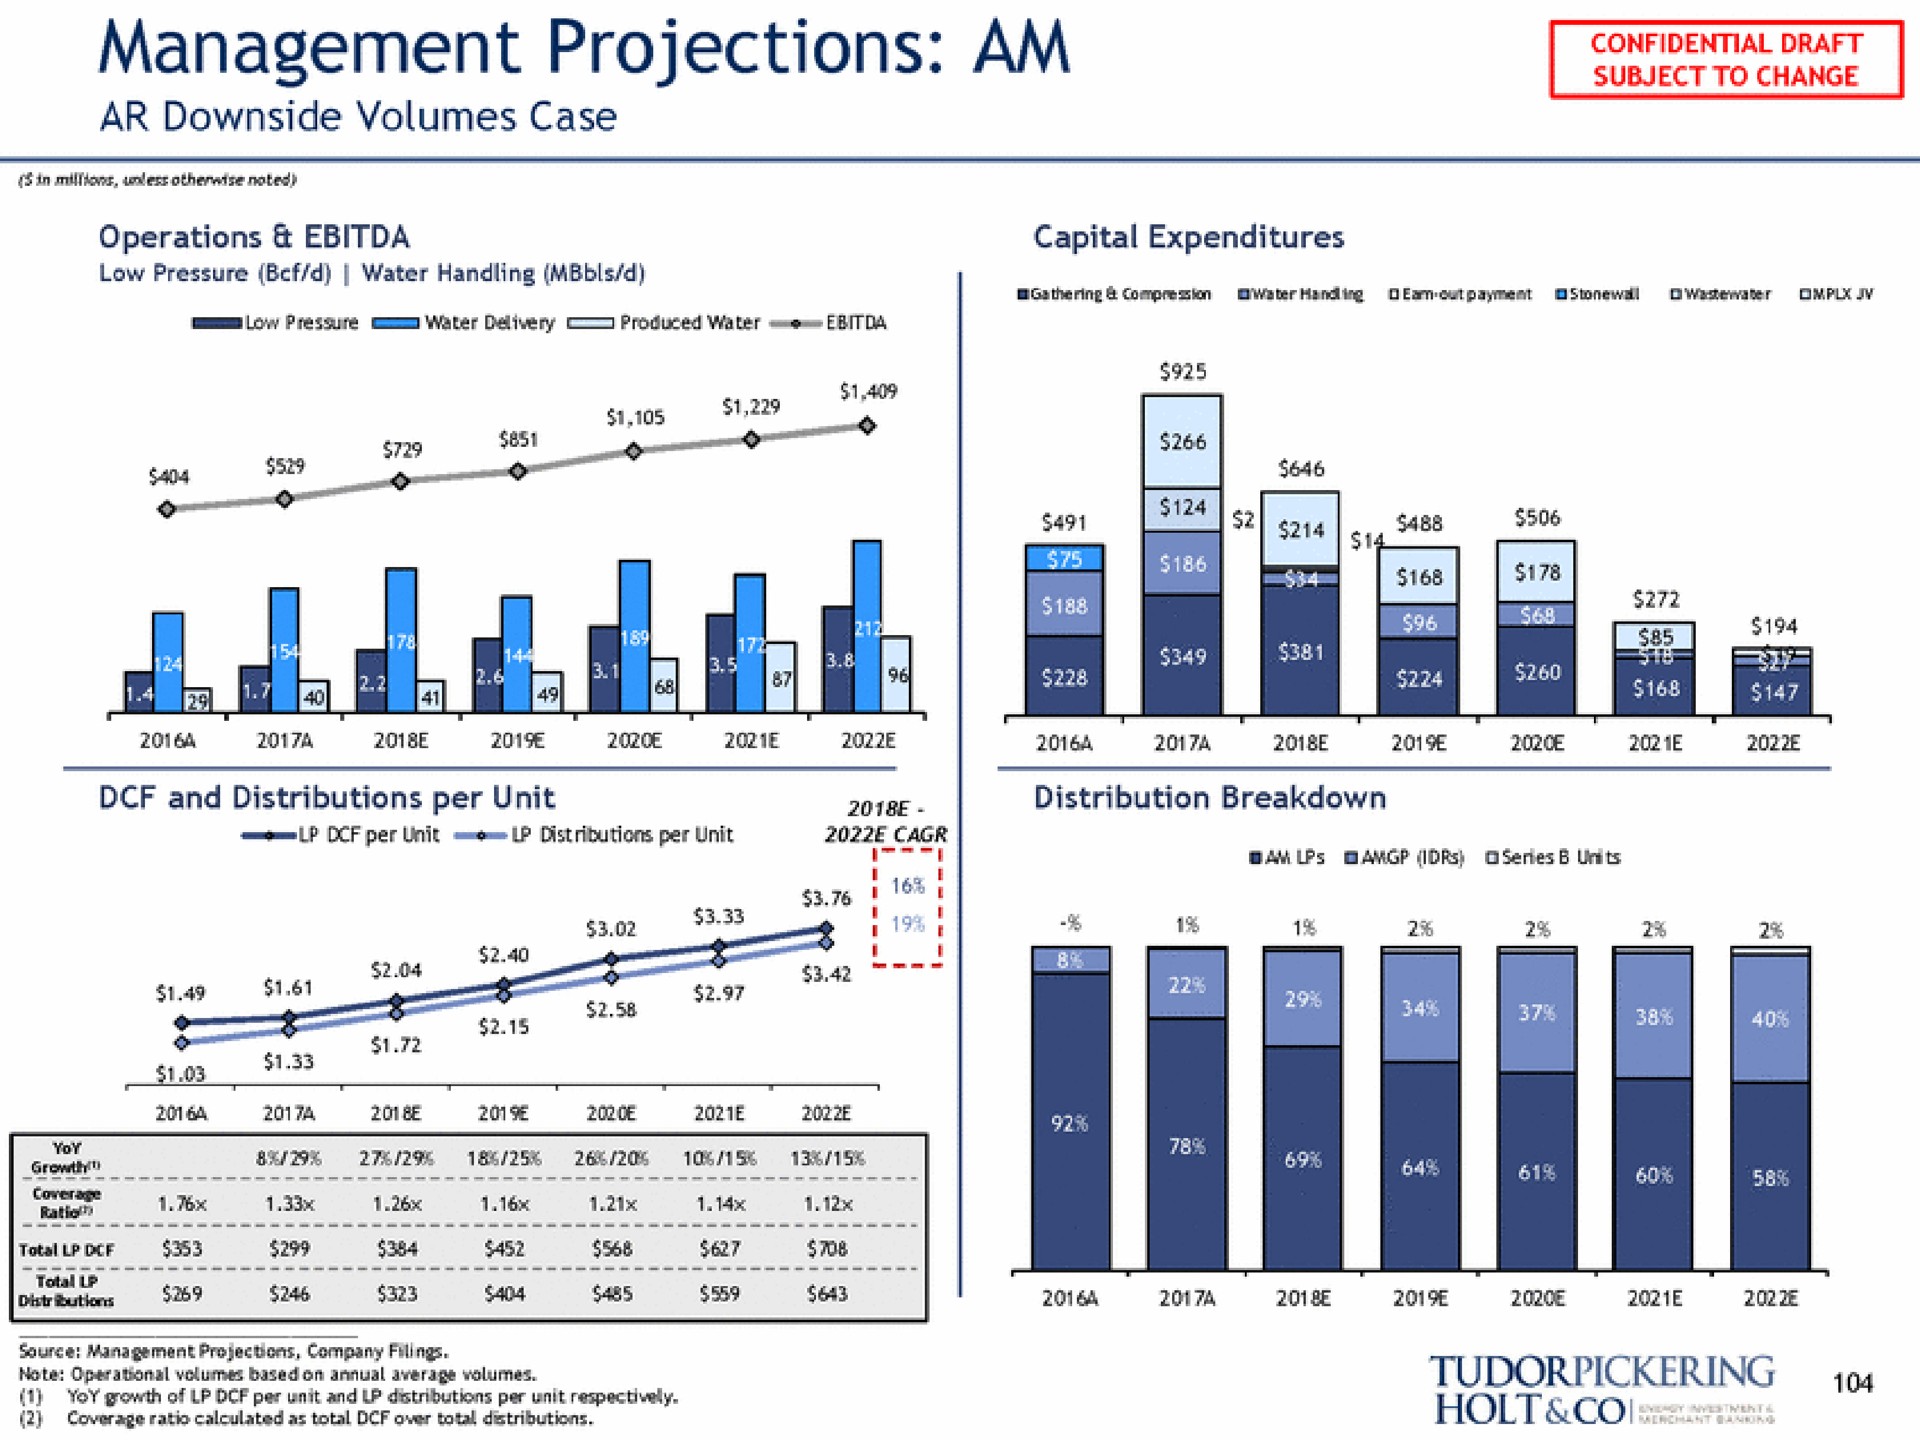 management projections am a | Tudor, Pickering, Holt & Co